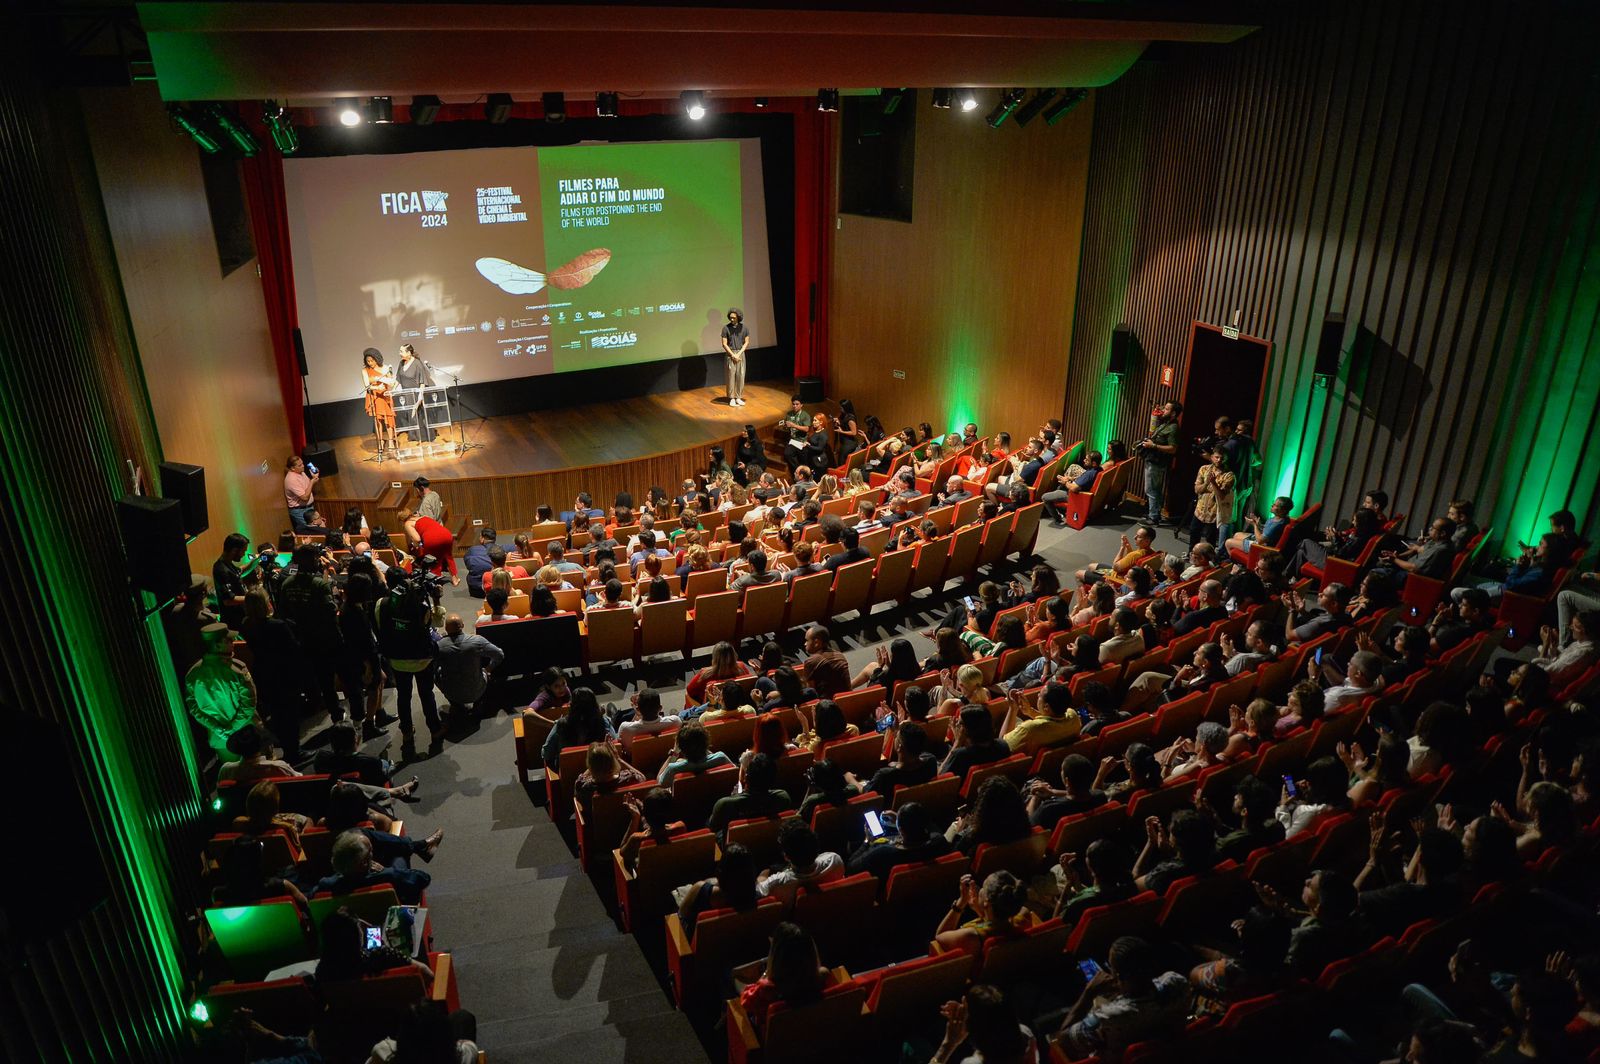 Festival Internacional de Cinema e Vídeo Ambiental (Fica)